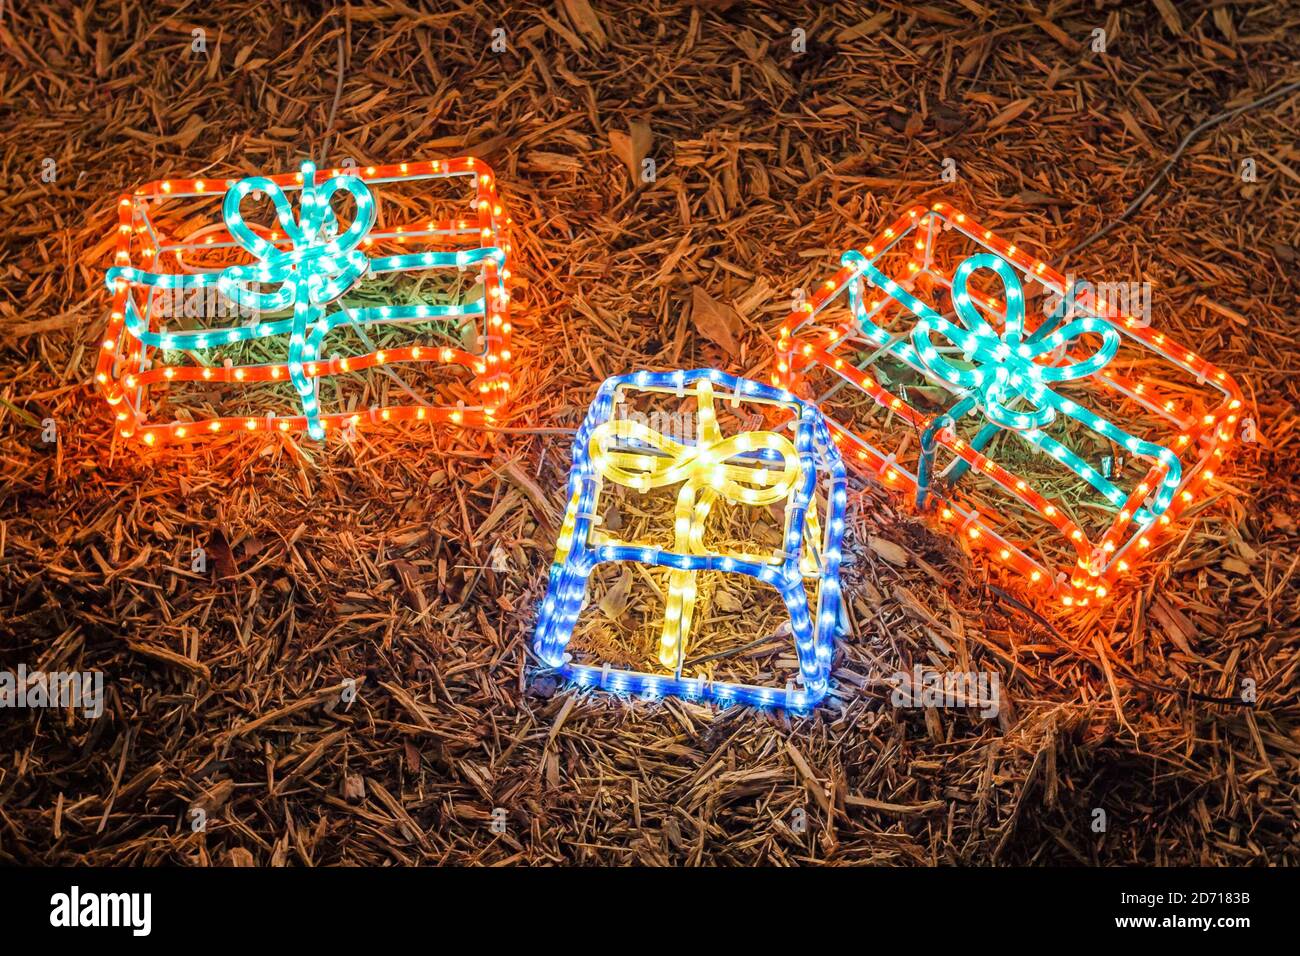 Miami Florida,Christmas decoration decorations winter holiday,lights lighting shape presents, Stock Photo